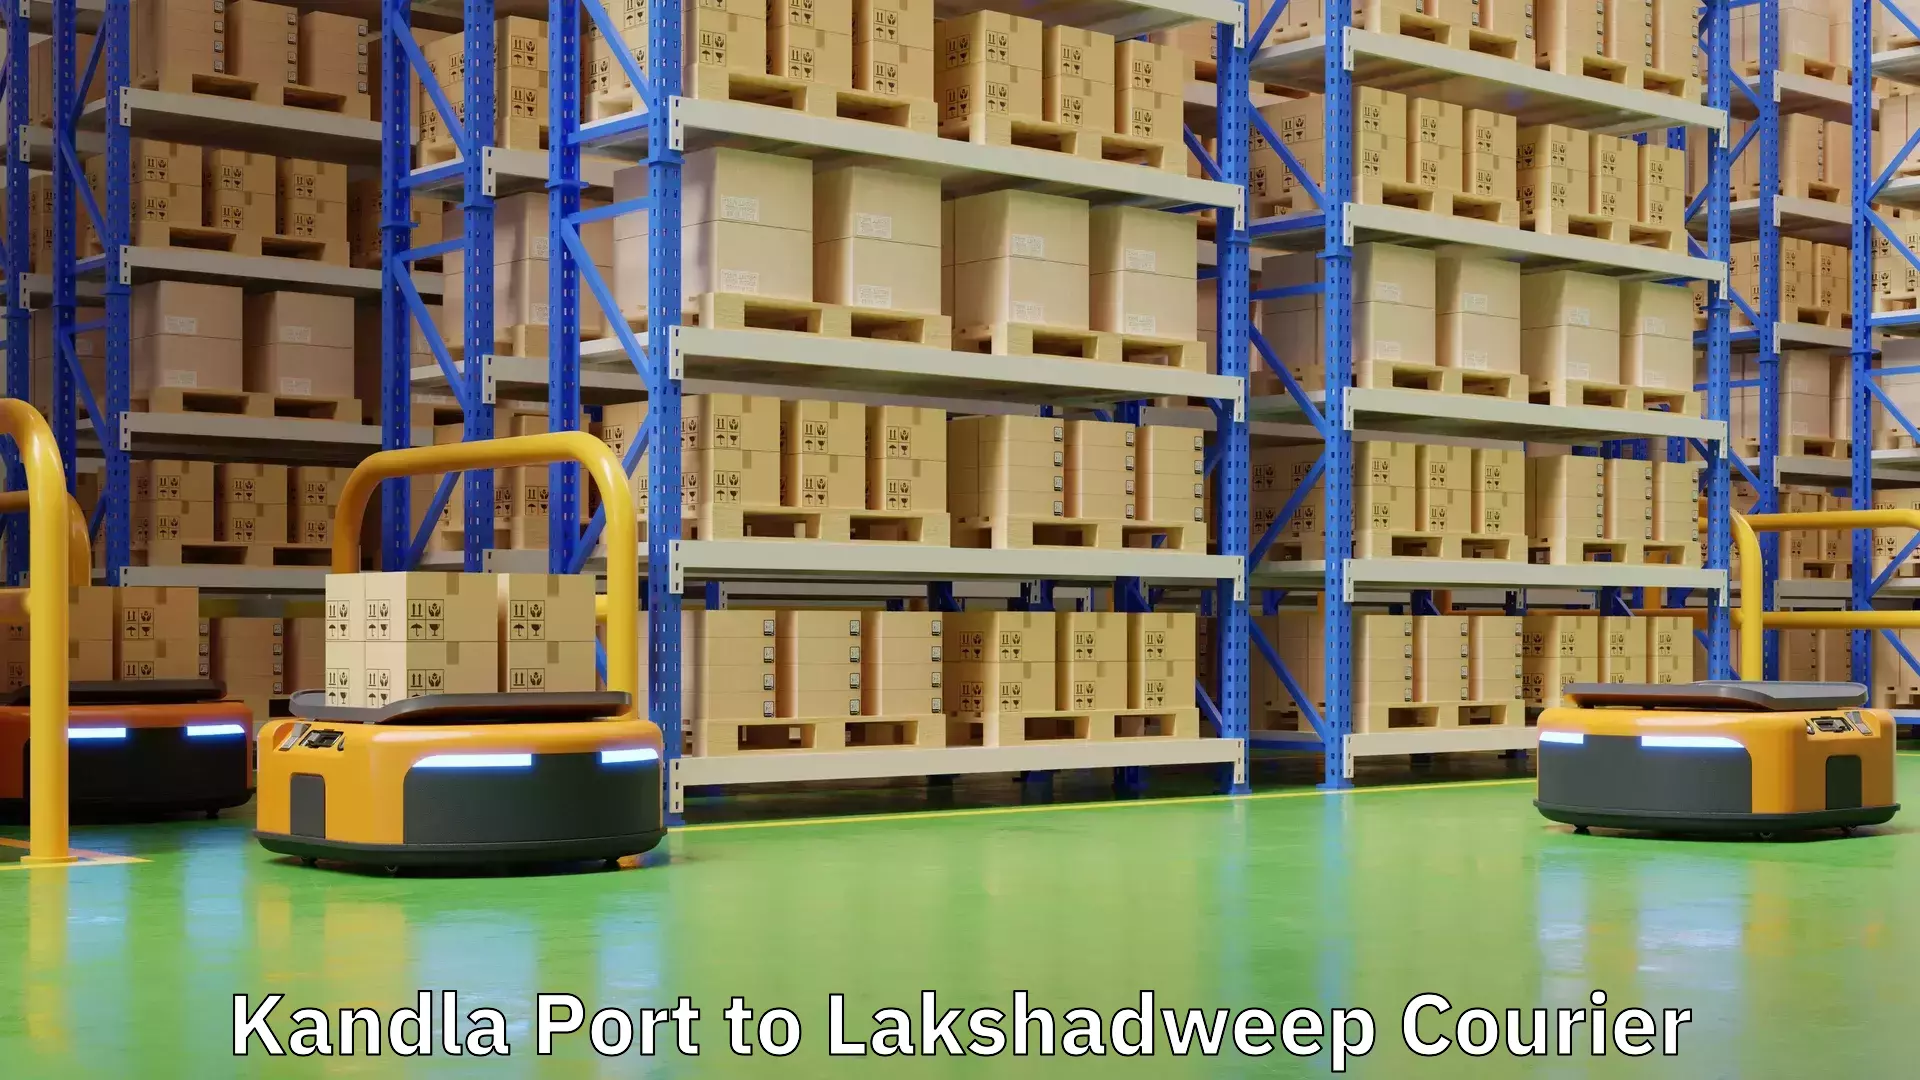 Global courier networks Kandla Port to Lakshadweep